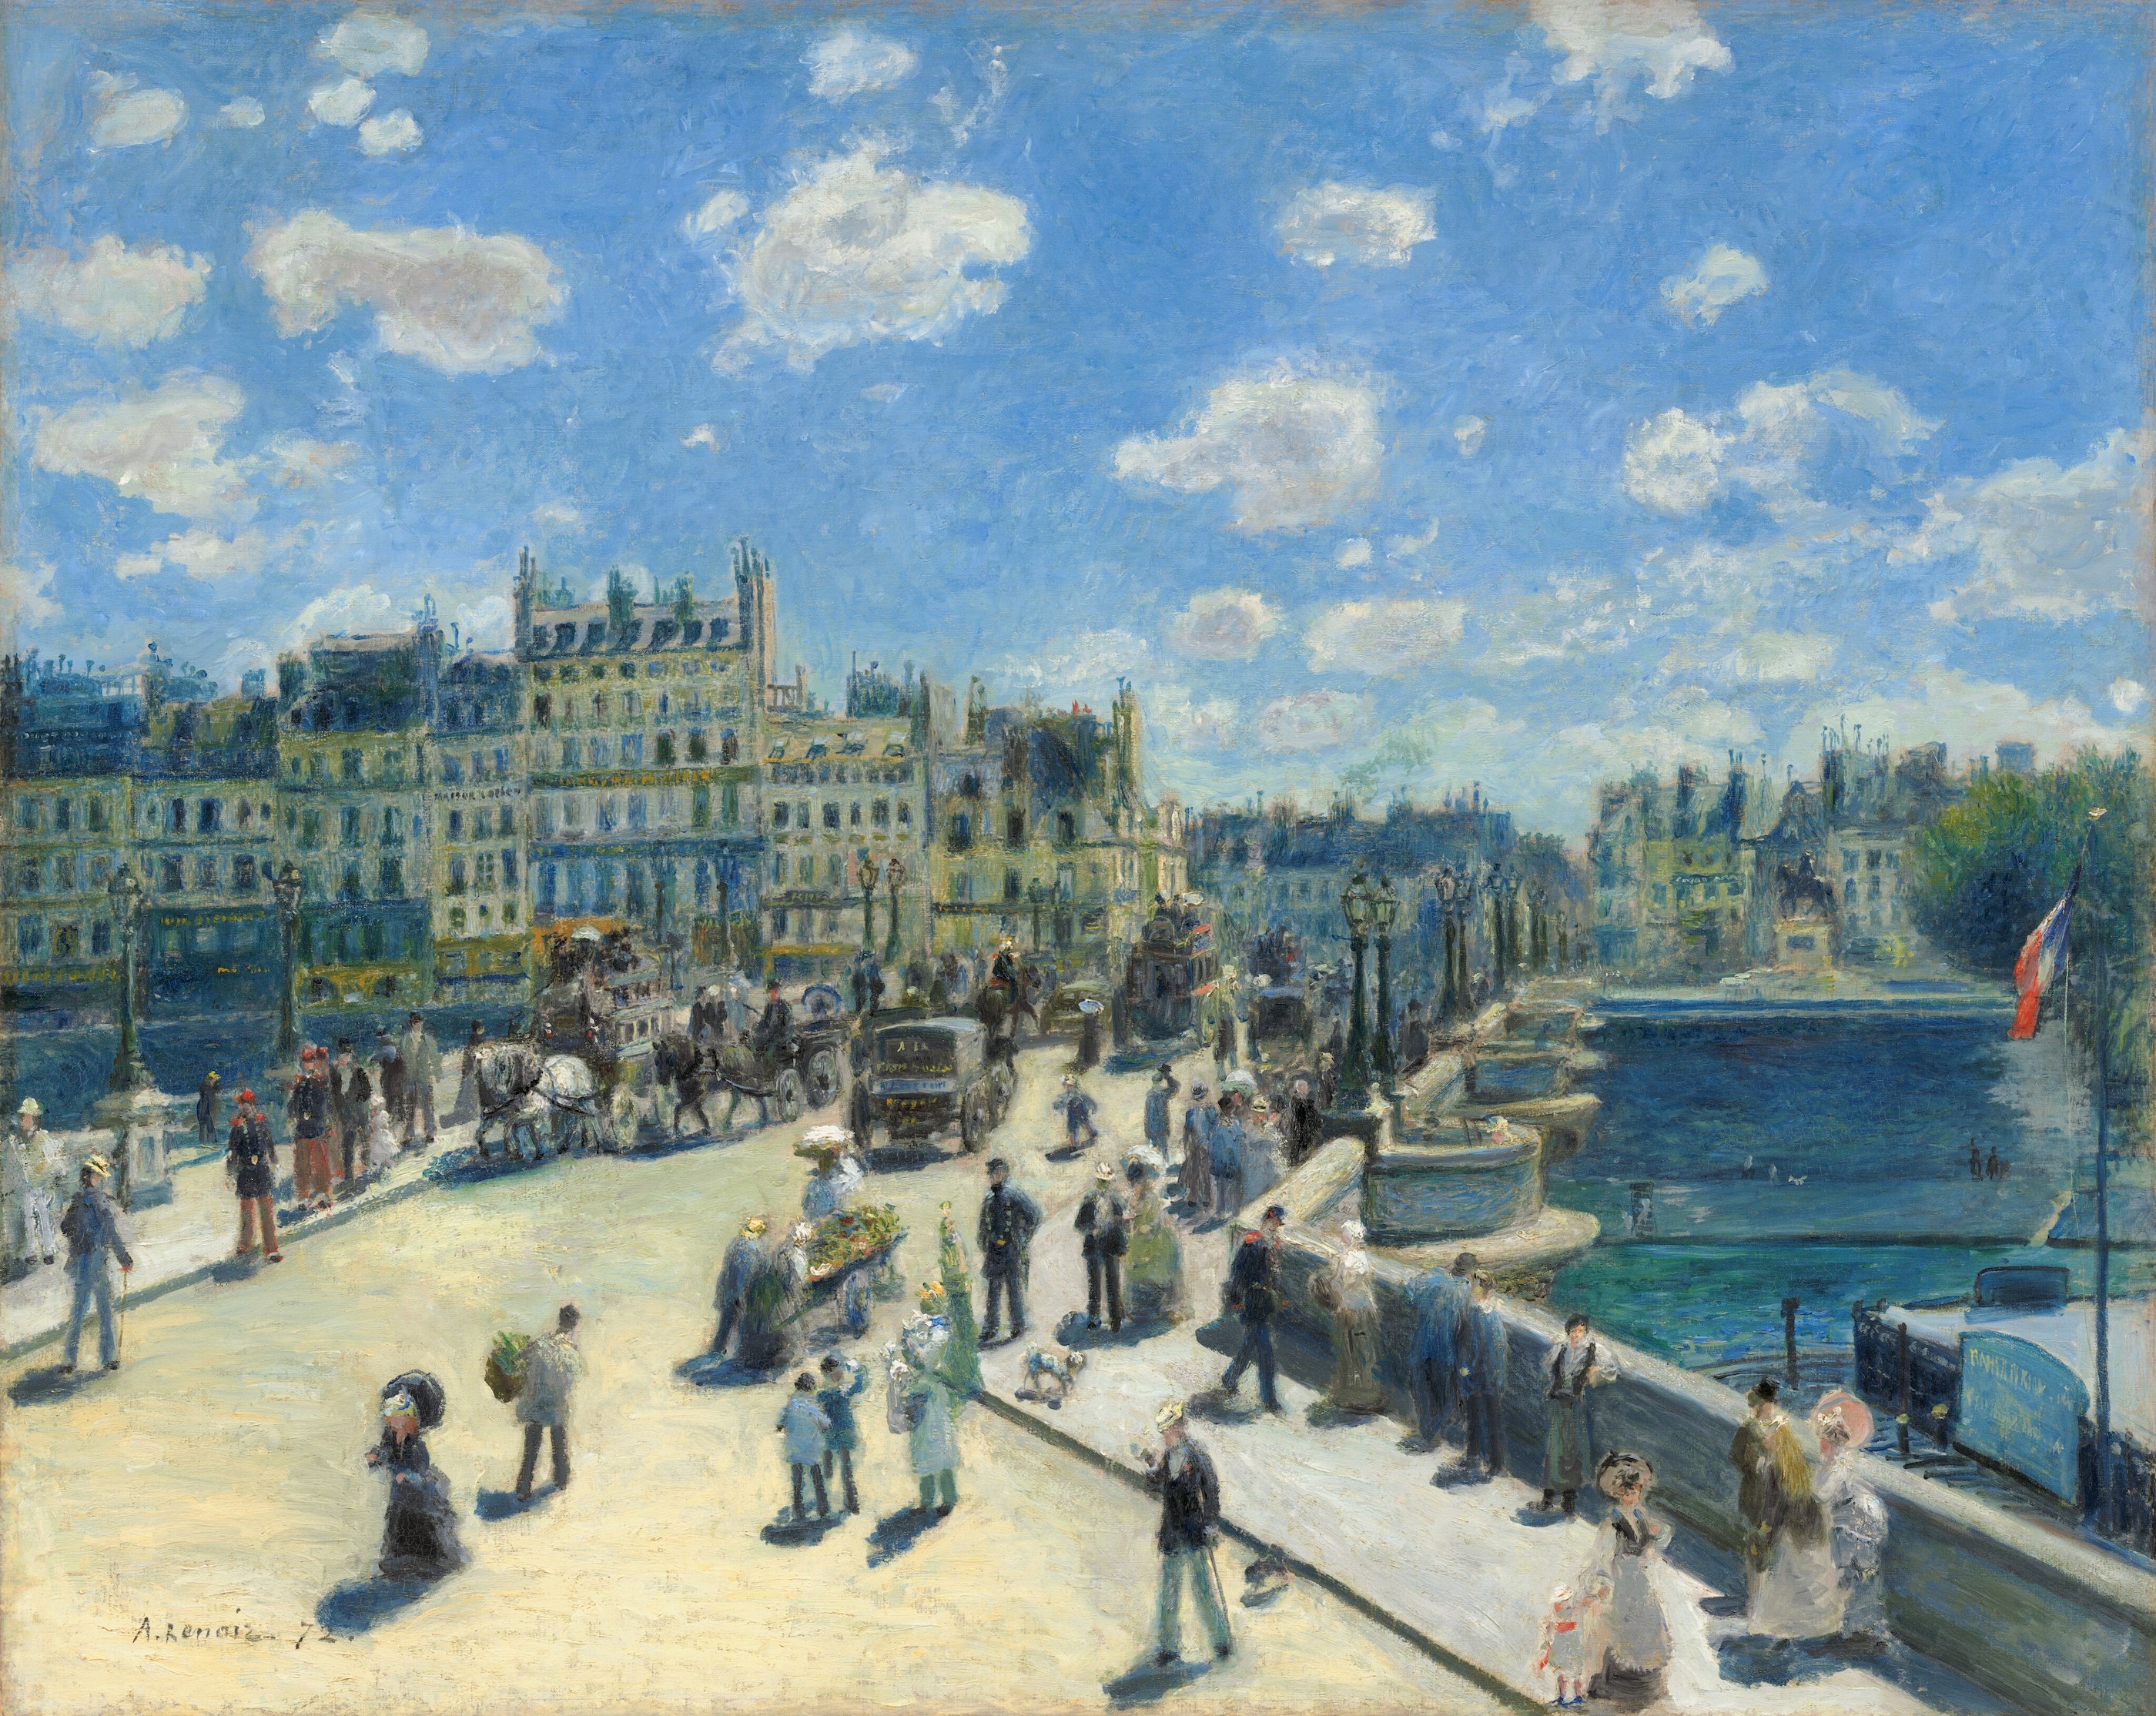 Le Pont Neuf Paris by Pierre-Auguste Renoir - 1872 - 75.3 x 93.7 cm National Gallery of Art